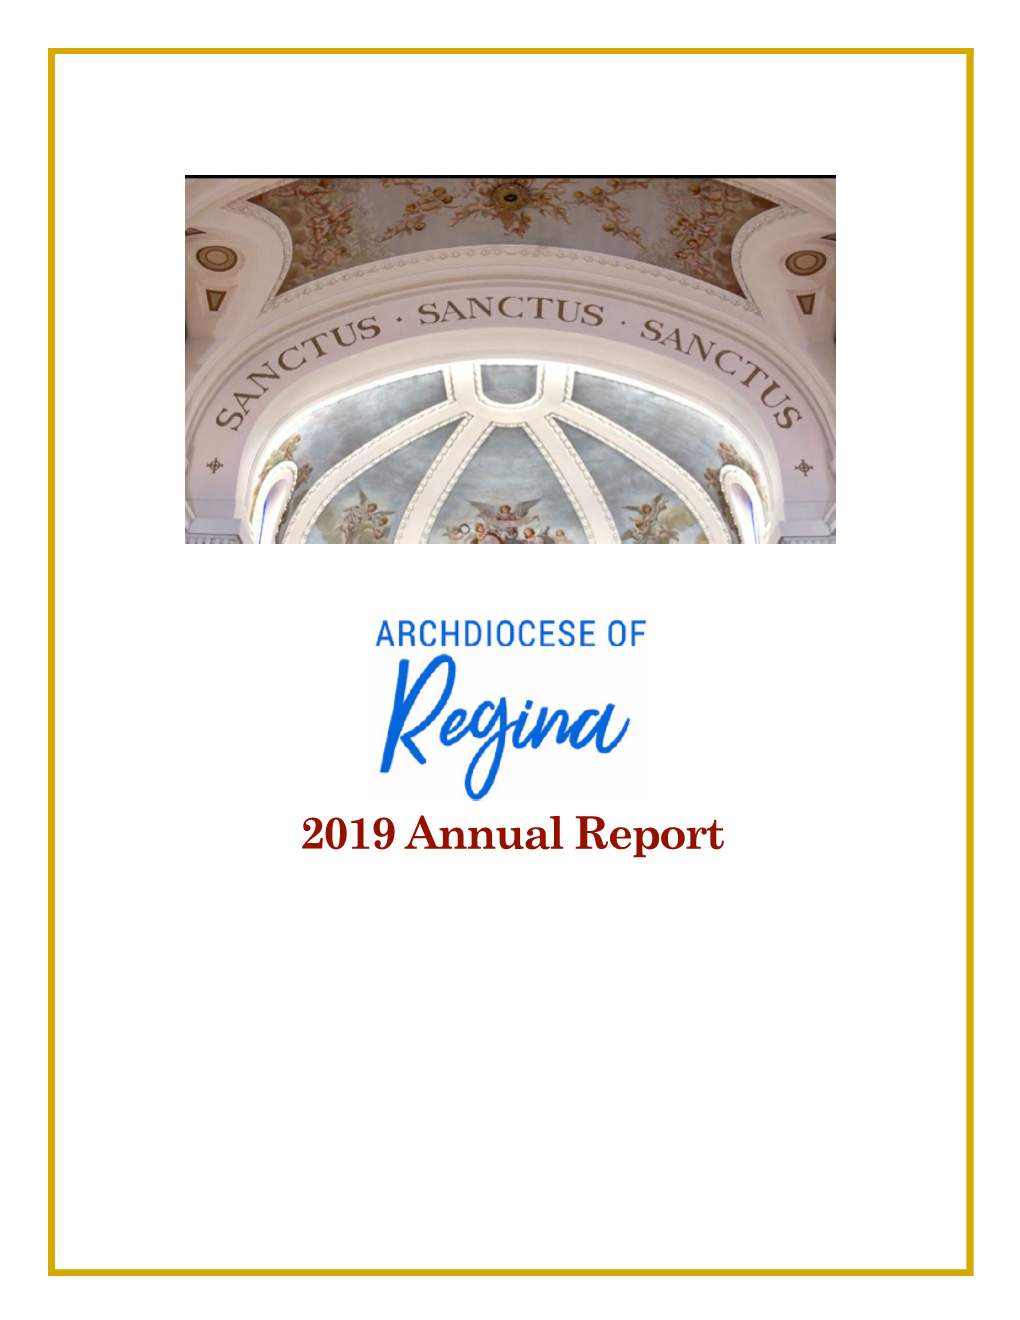 Archdiocese of Regina 2019 Annual Report